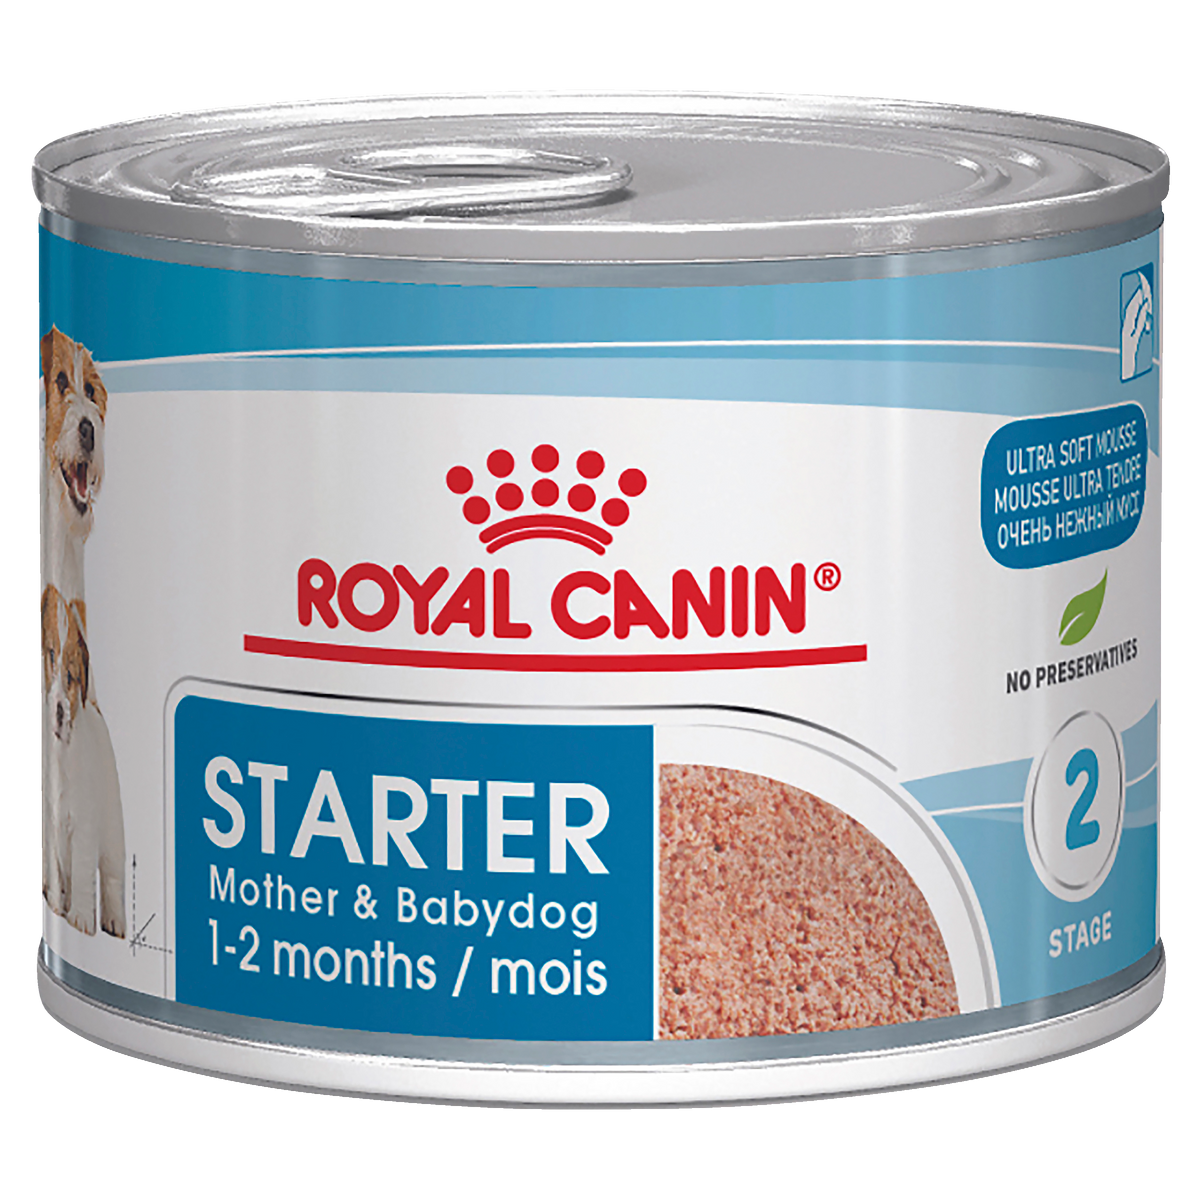 Royal Canin Starter Mousse Wet Food 12x195g